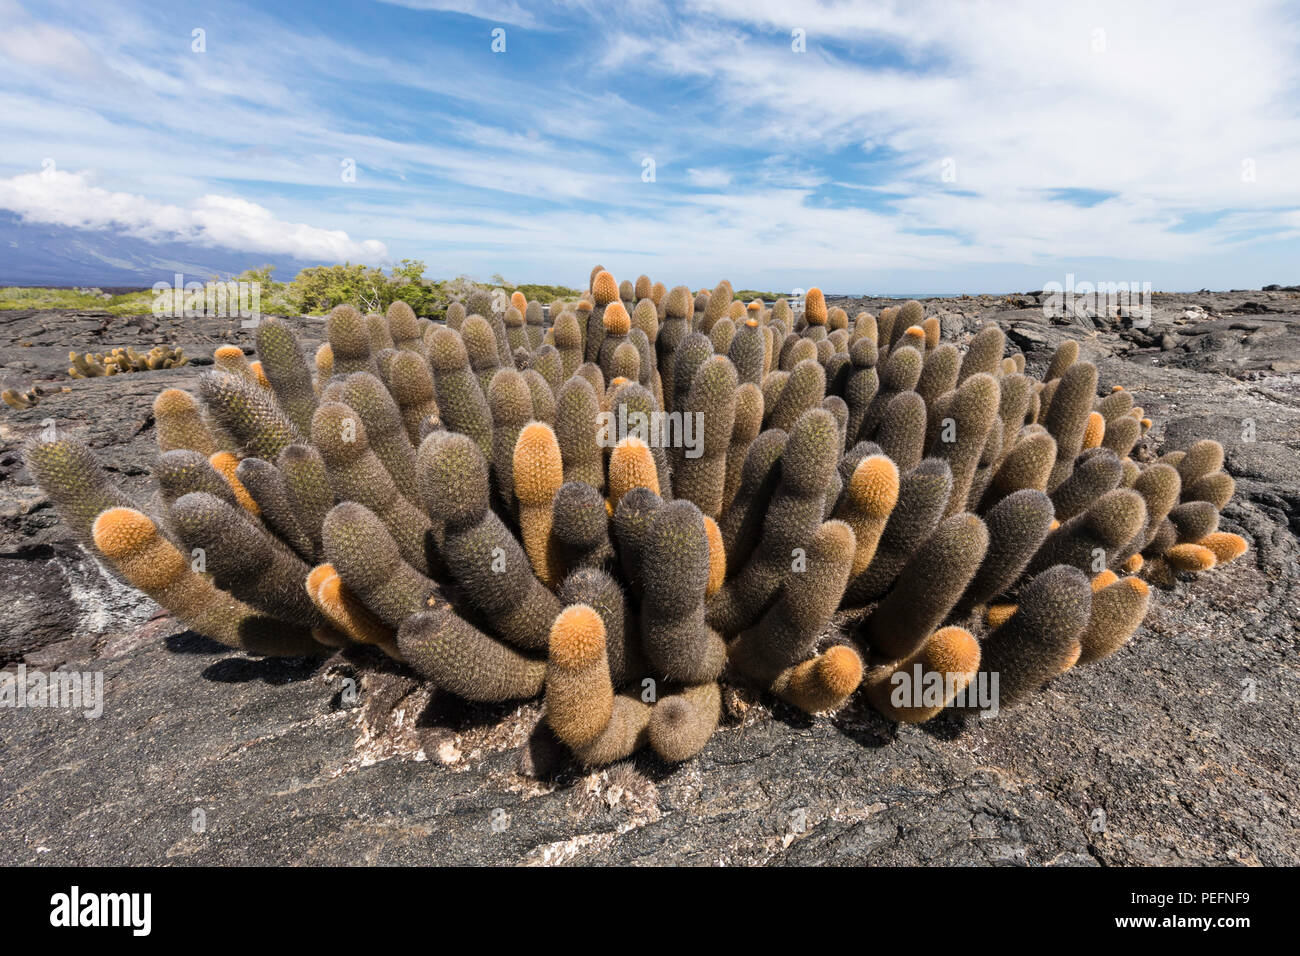 Endemische lava Kaktus, Brachycereus spp, Fernandina Insel, Galapagos, Ecuador. Stockfoto